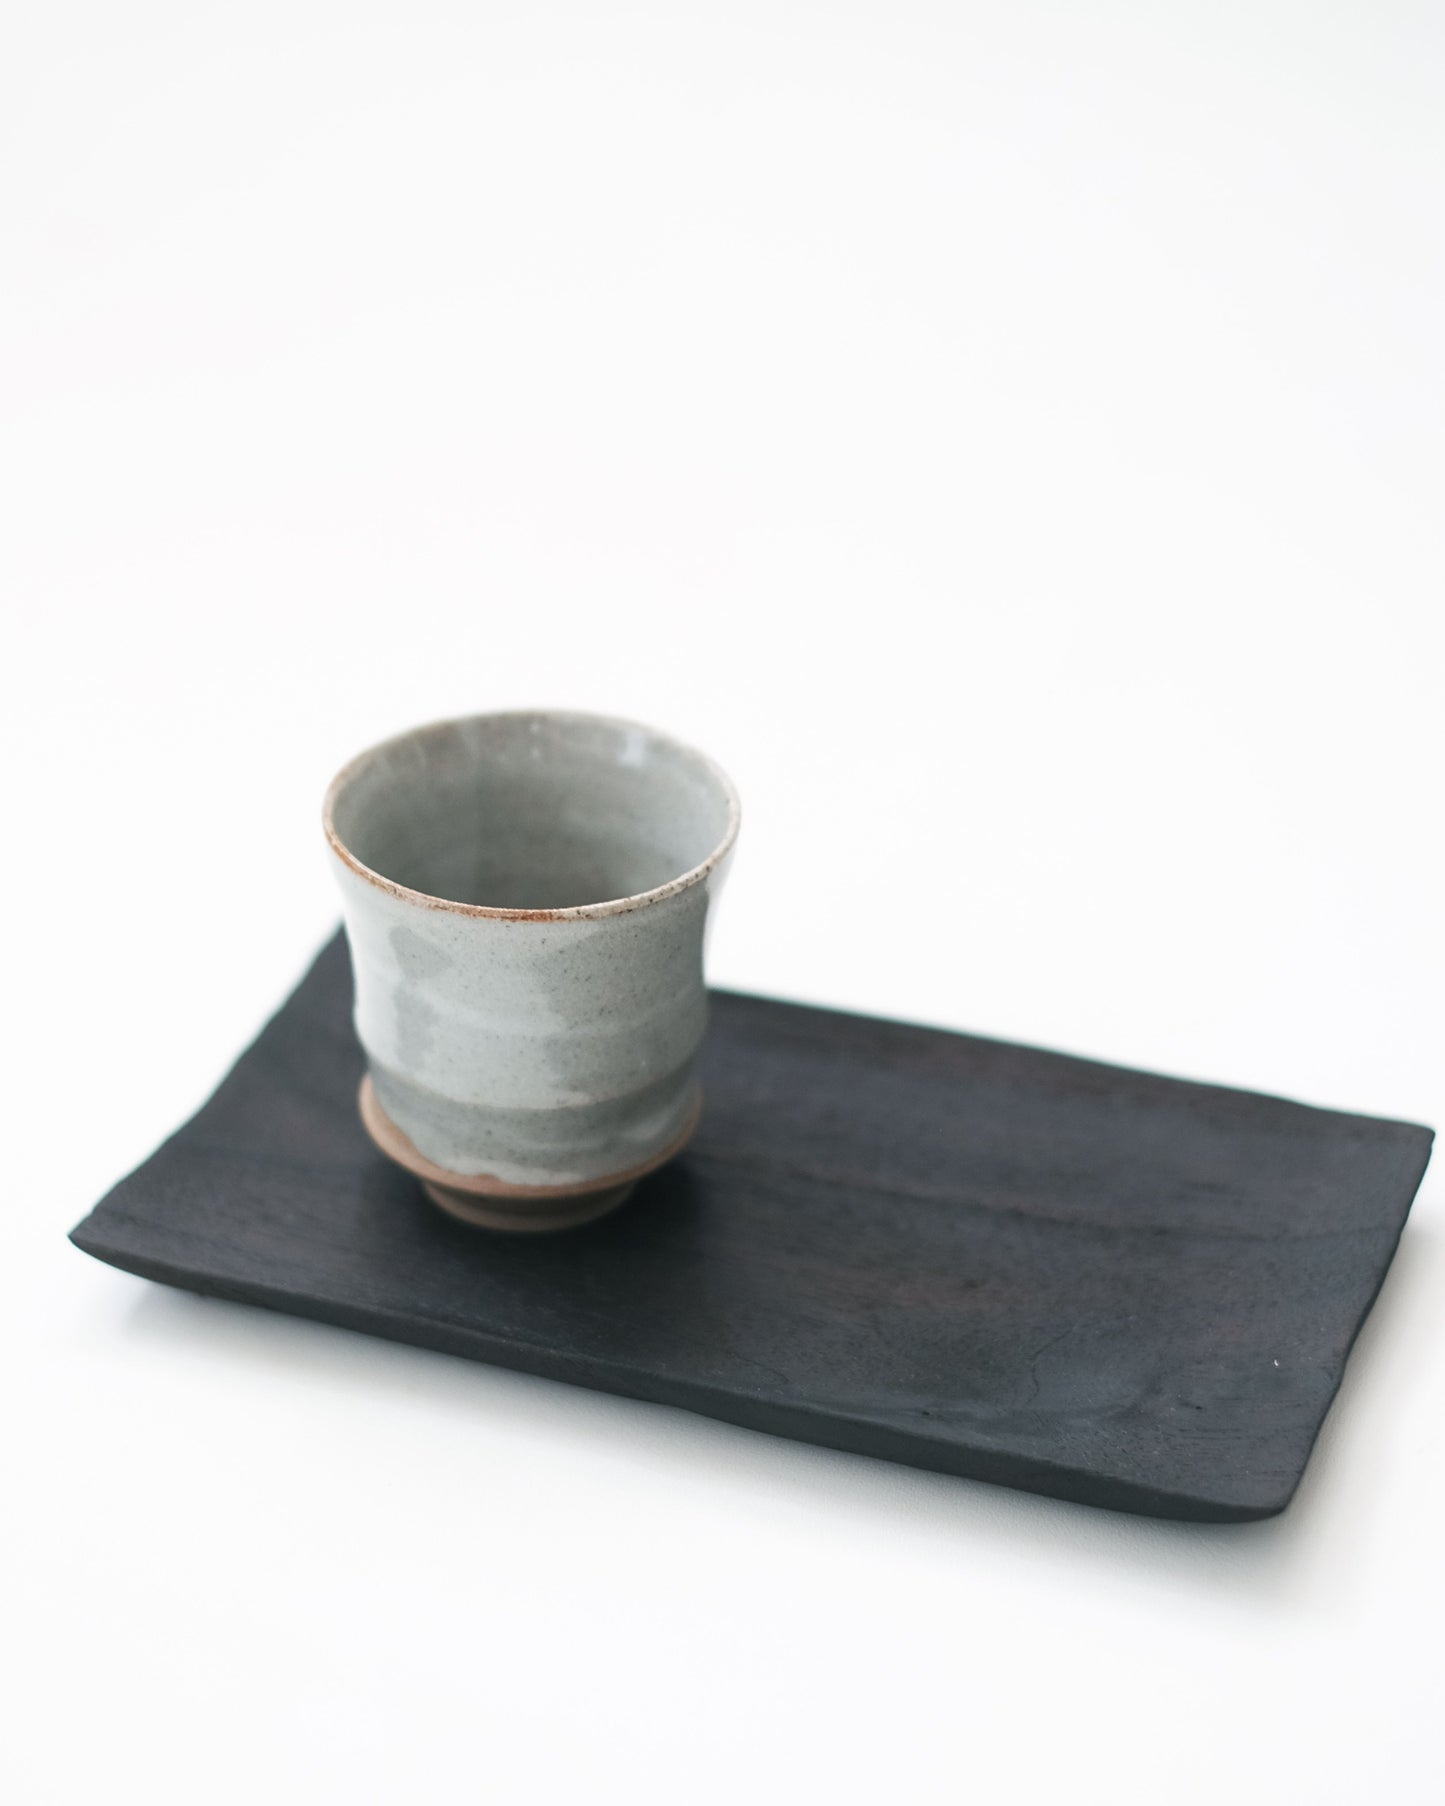 Shiro Small Cup Tray Set